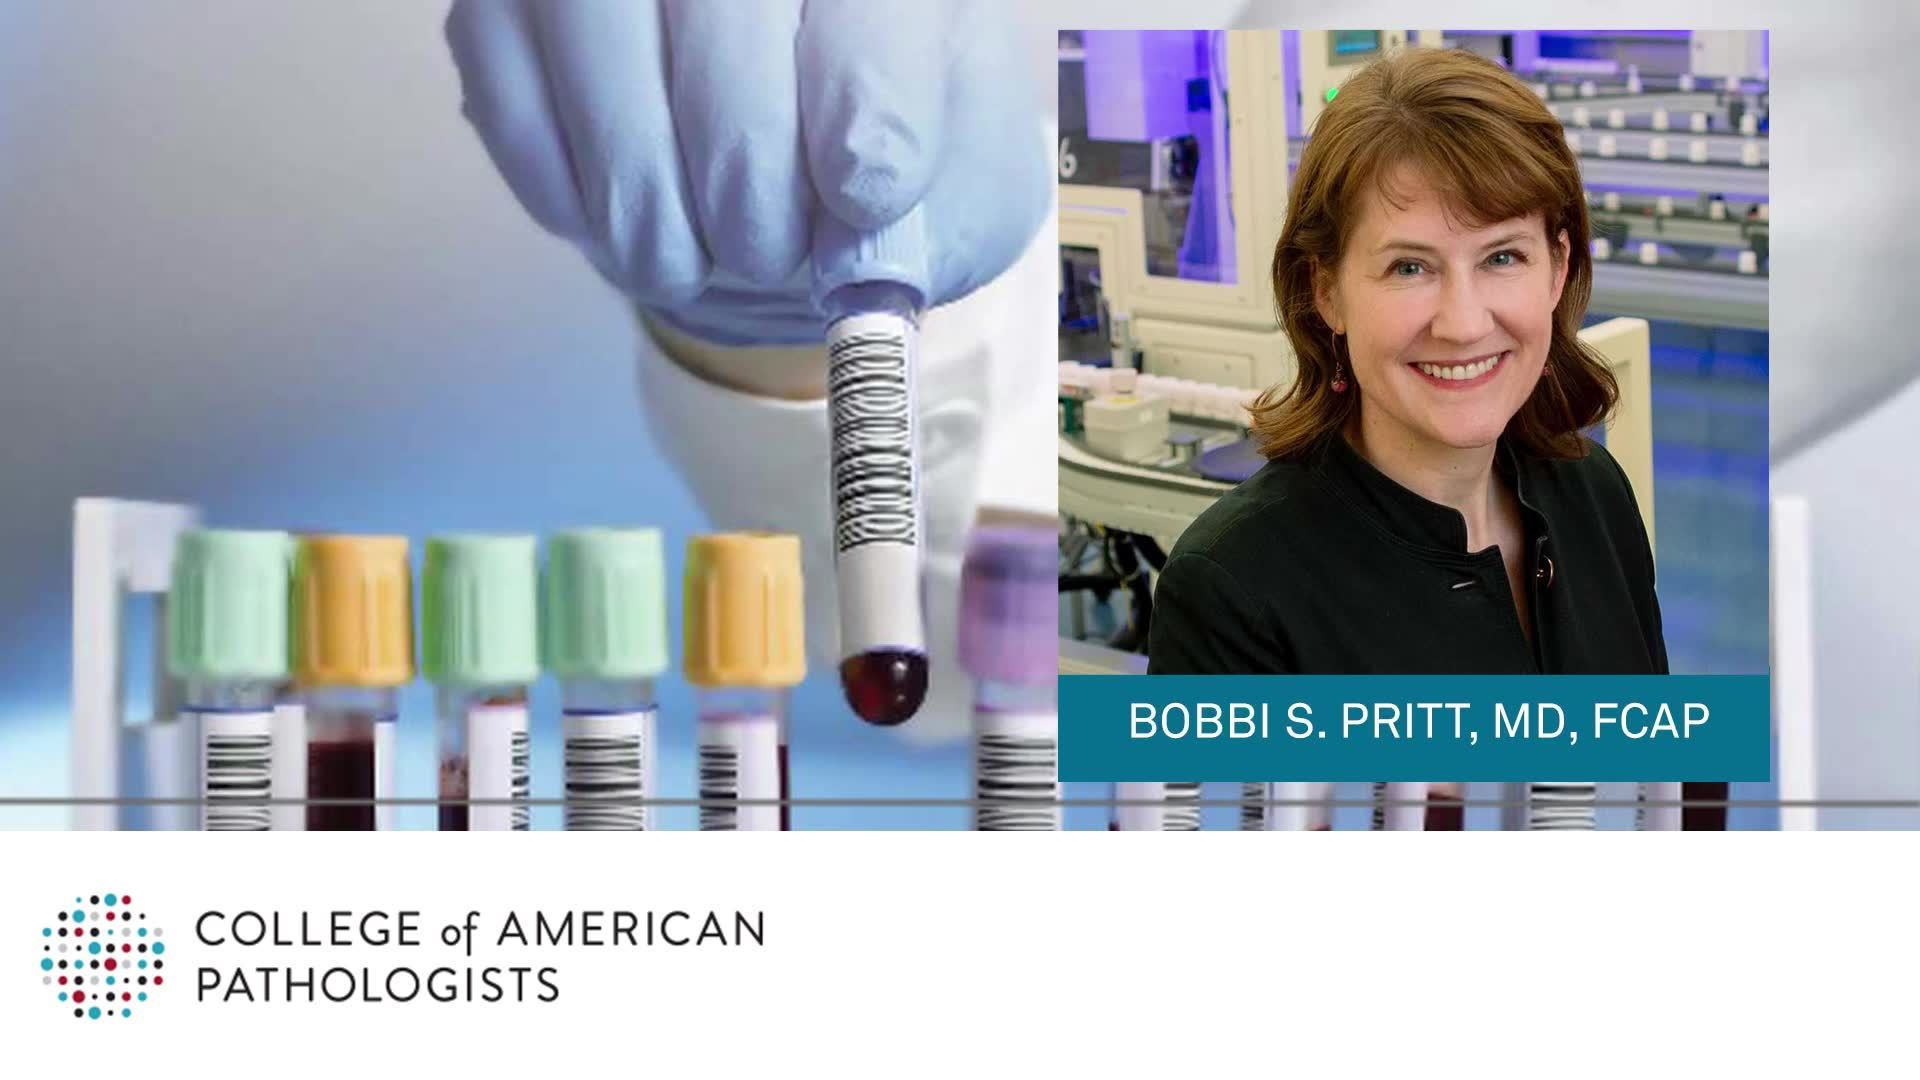 Bobbi S. Pritt, MD, FCAP, joined the Dr. Radio Internal Medicine show on SIRIUS XM